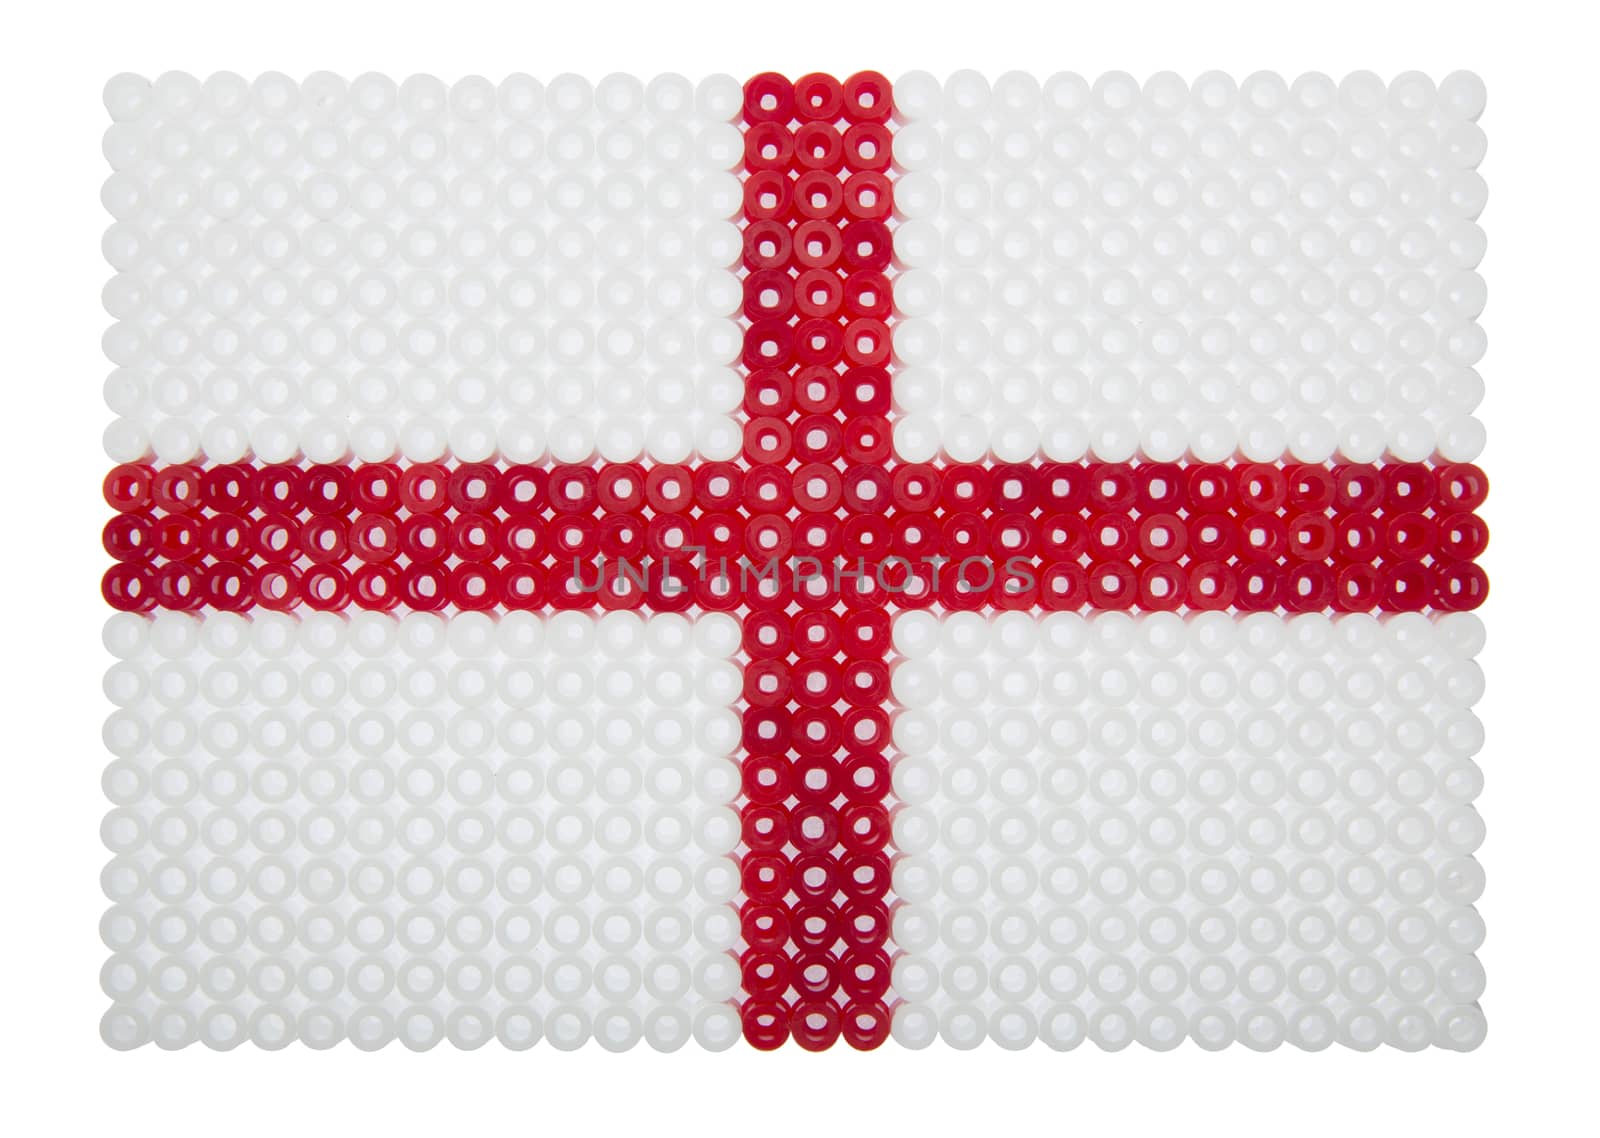 English Flag made of plastic pearls